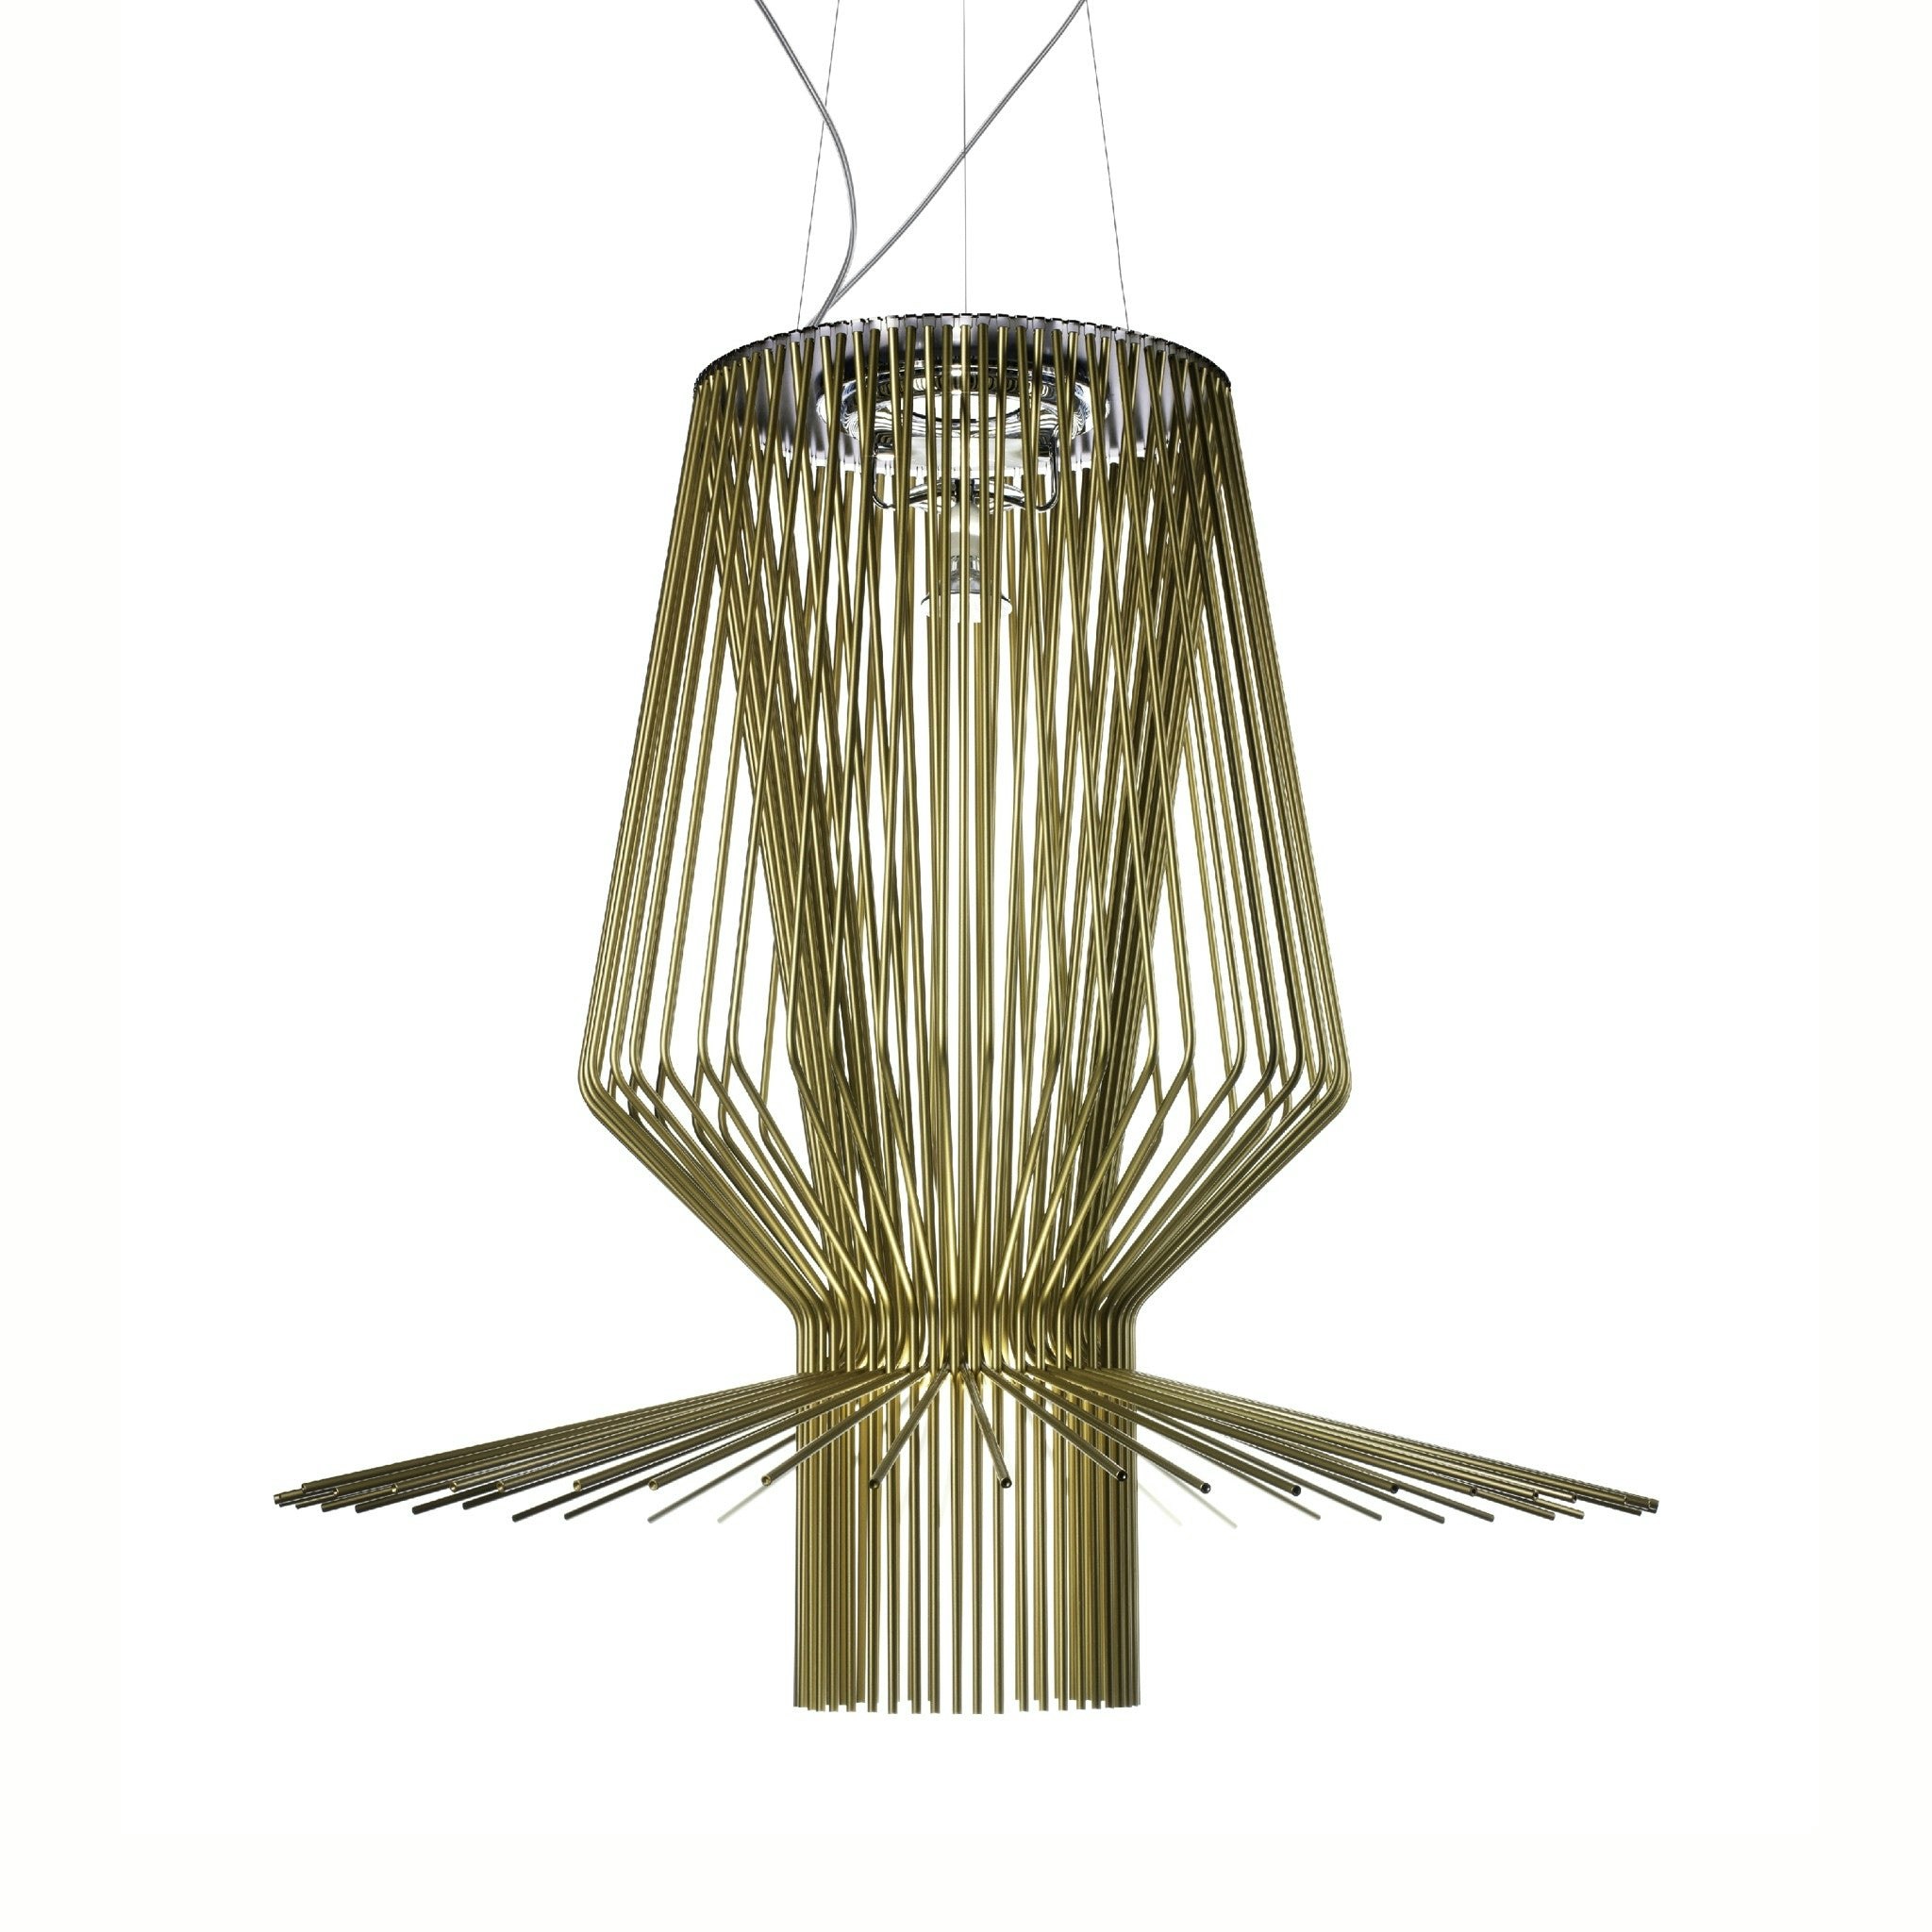 Allegro Pendant Lamp by Foscarini